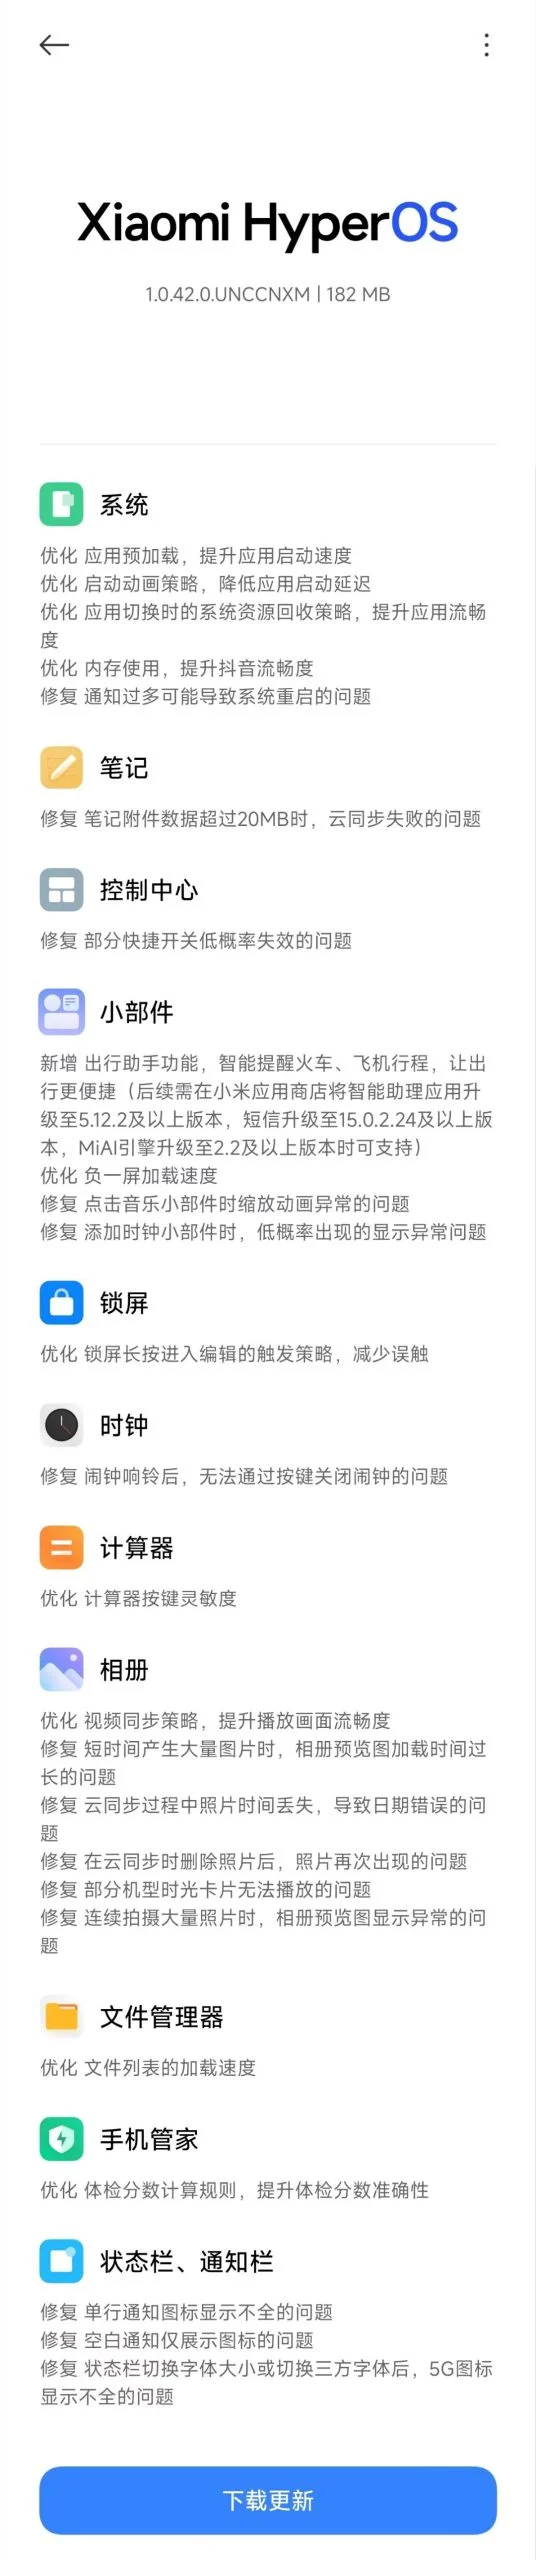 (Image source : Xiaomi via Gizmochina)